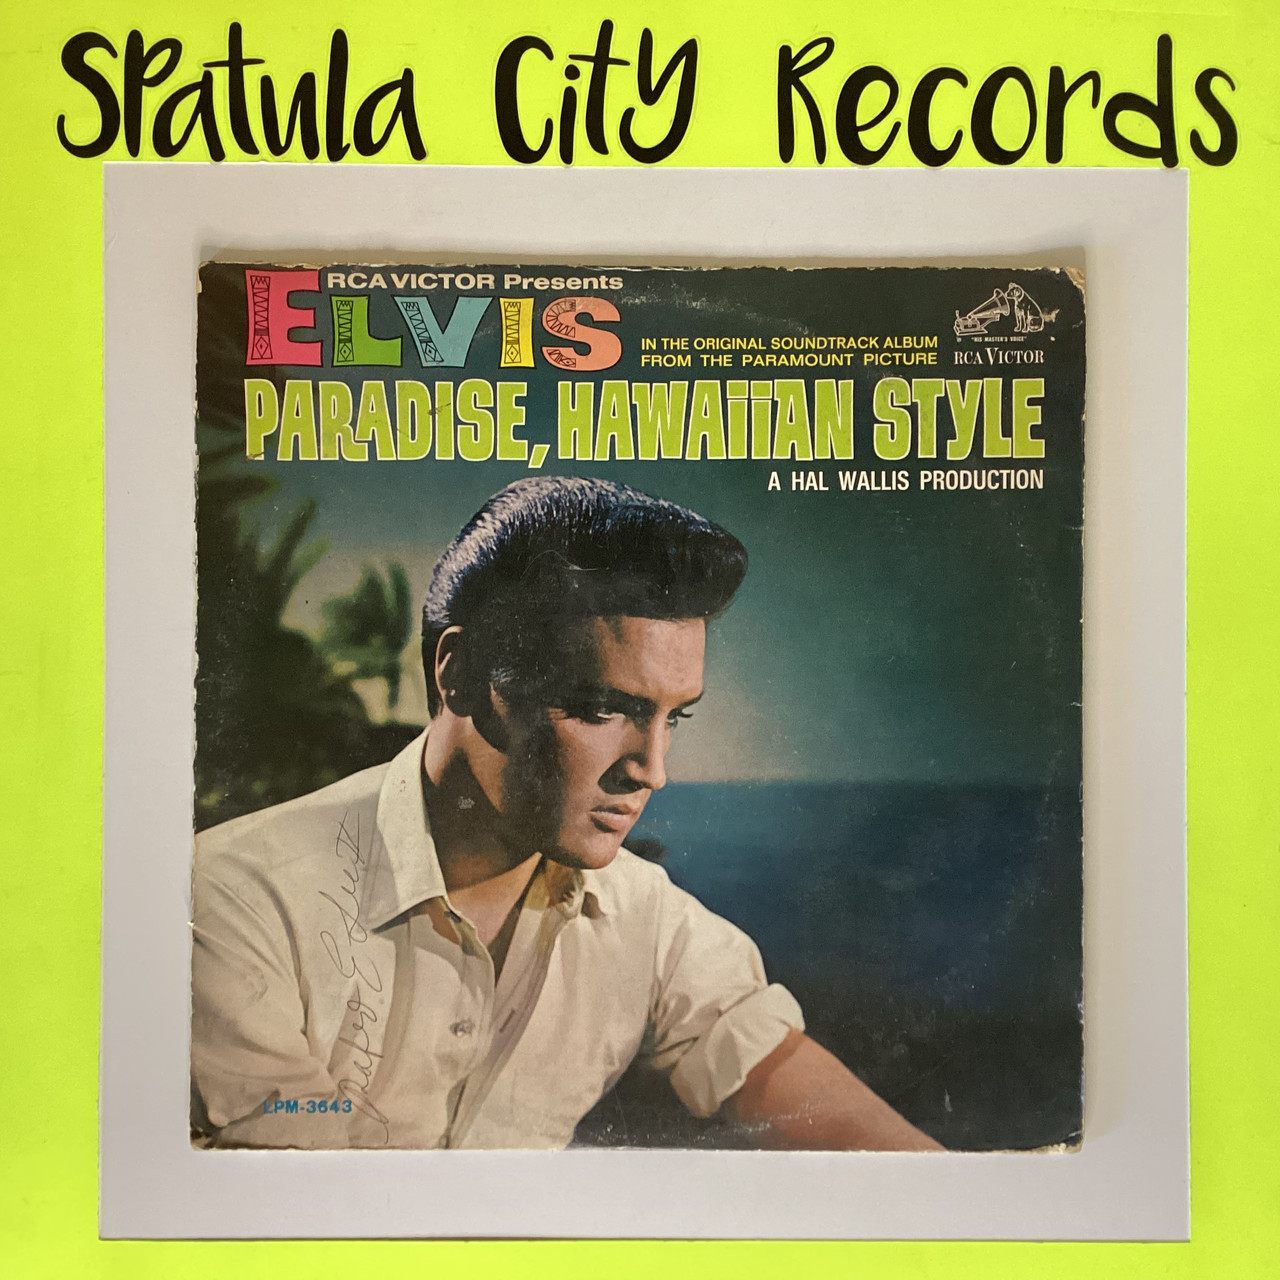 Elvis Presley - Paradise, Hawaiian Style - mono - vinyl record album LP